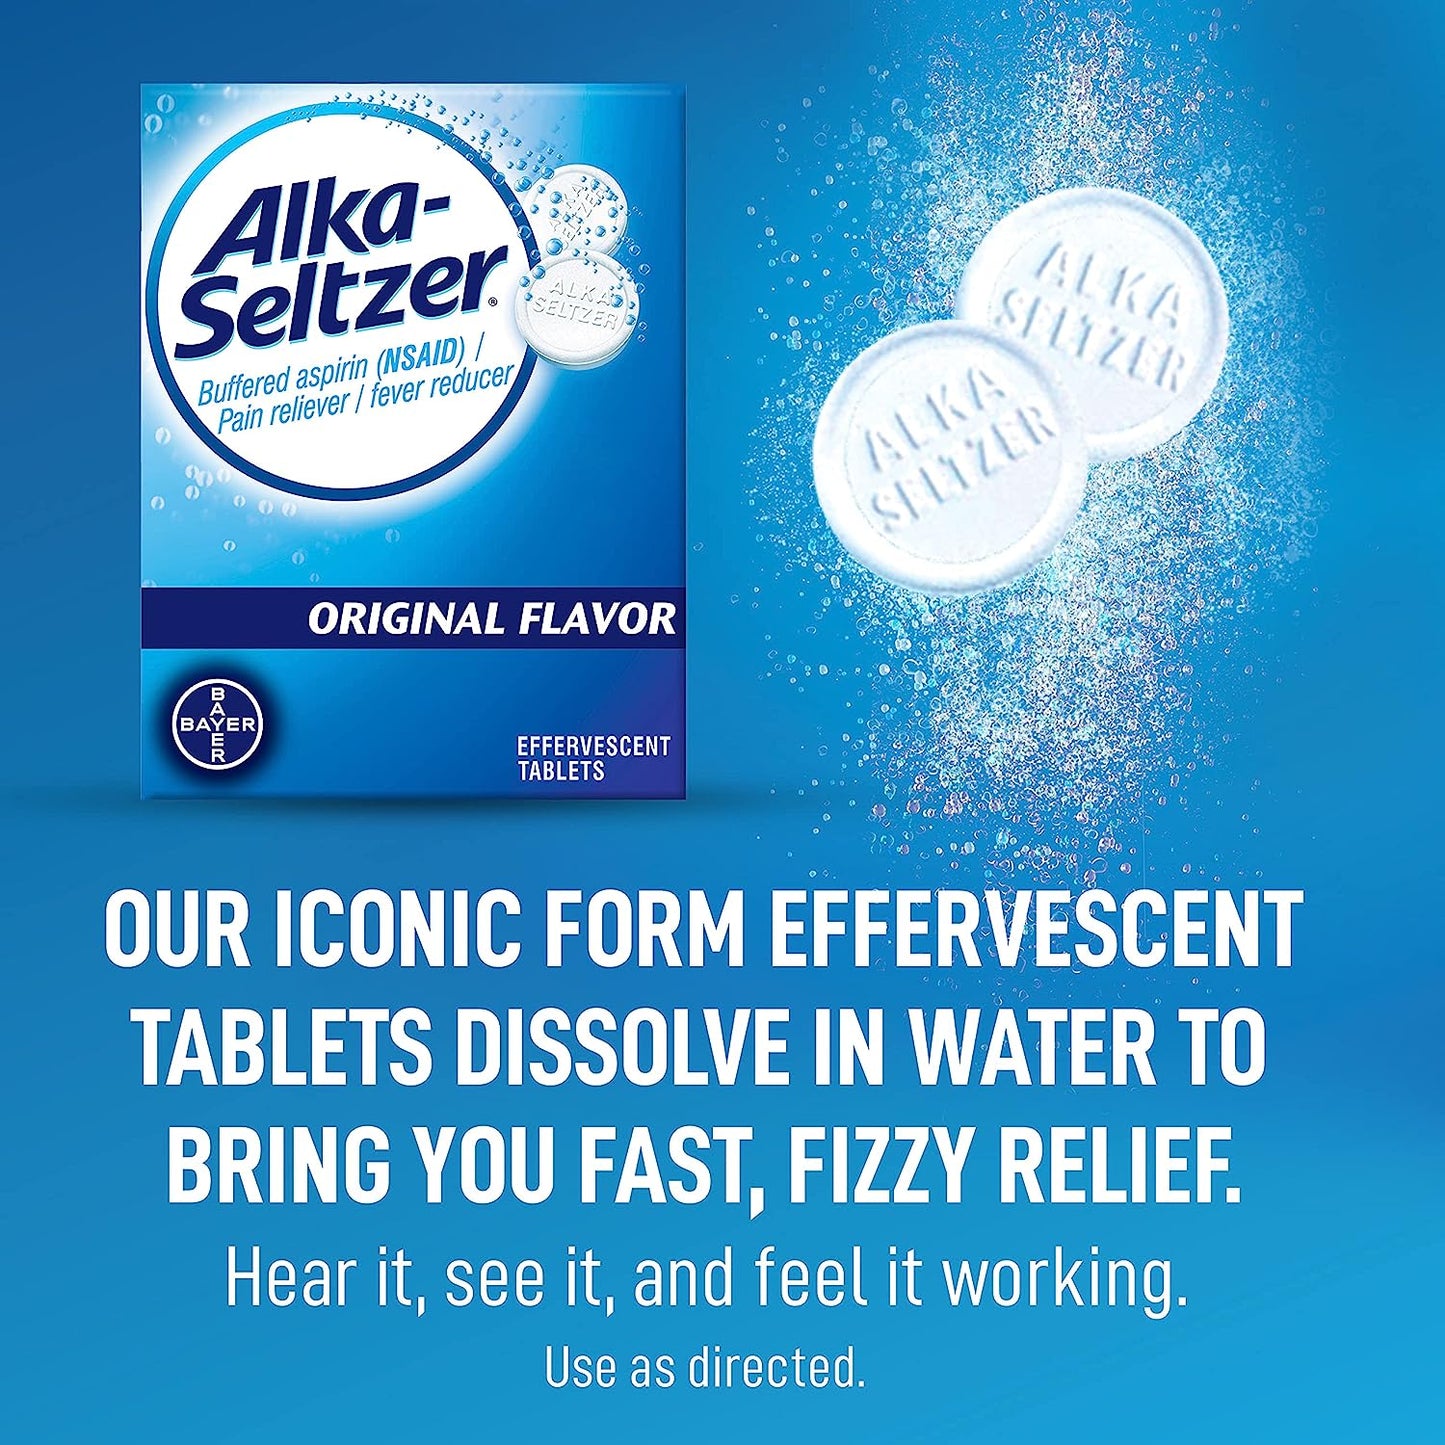 Alka-Seltzer Original Pain Relief Effervescent Tablets 72 Count